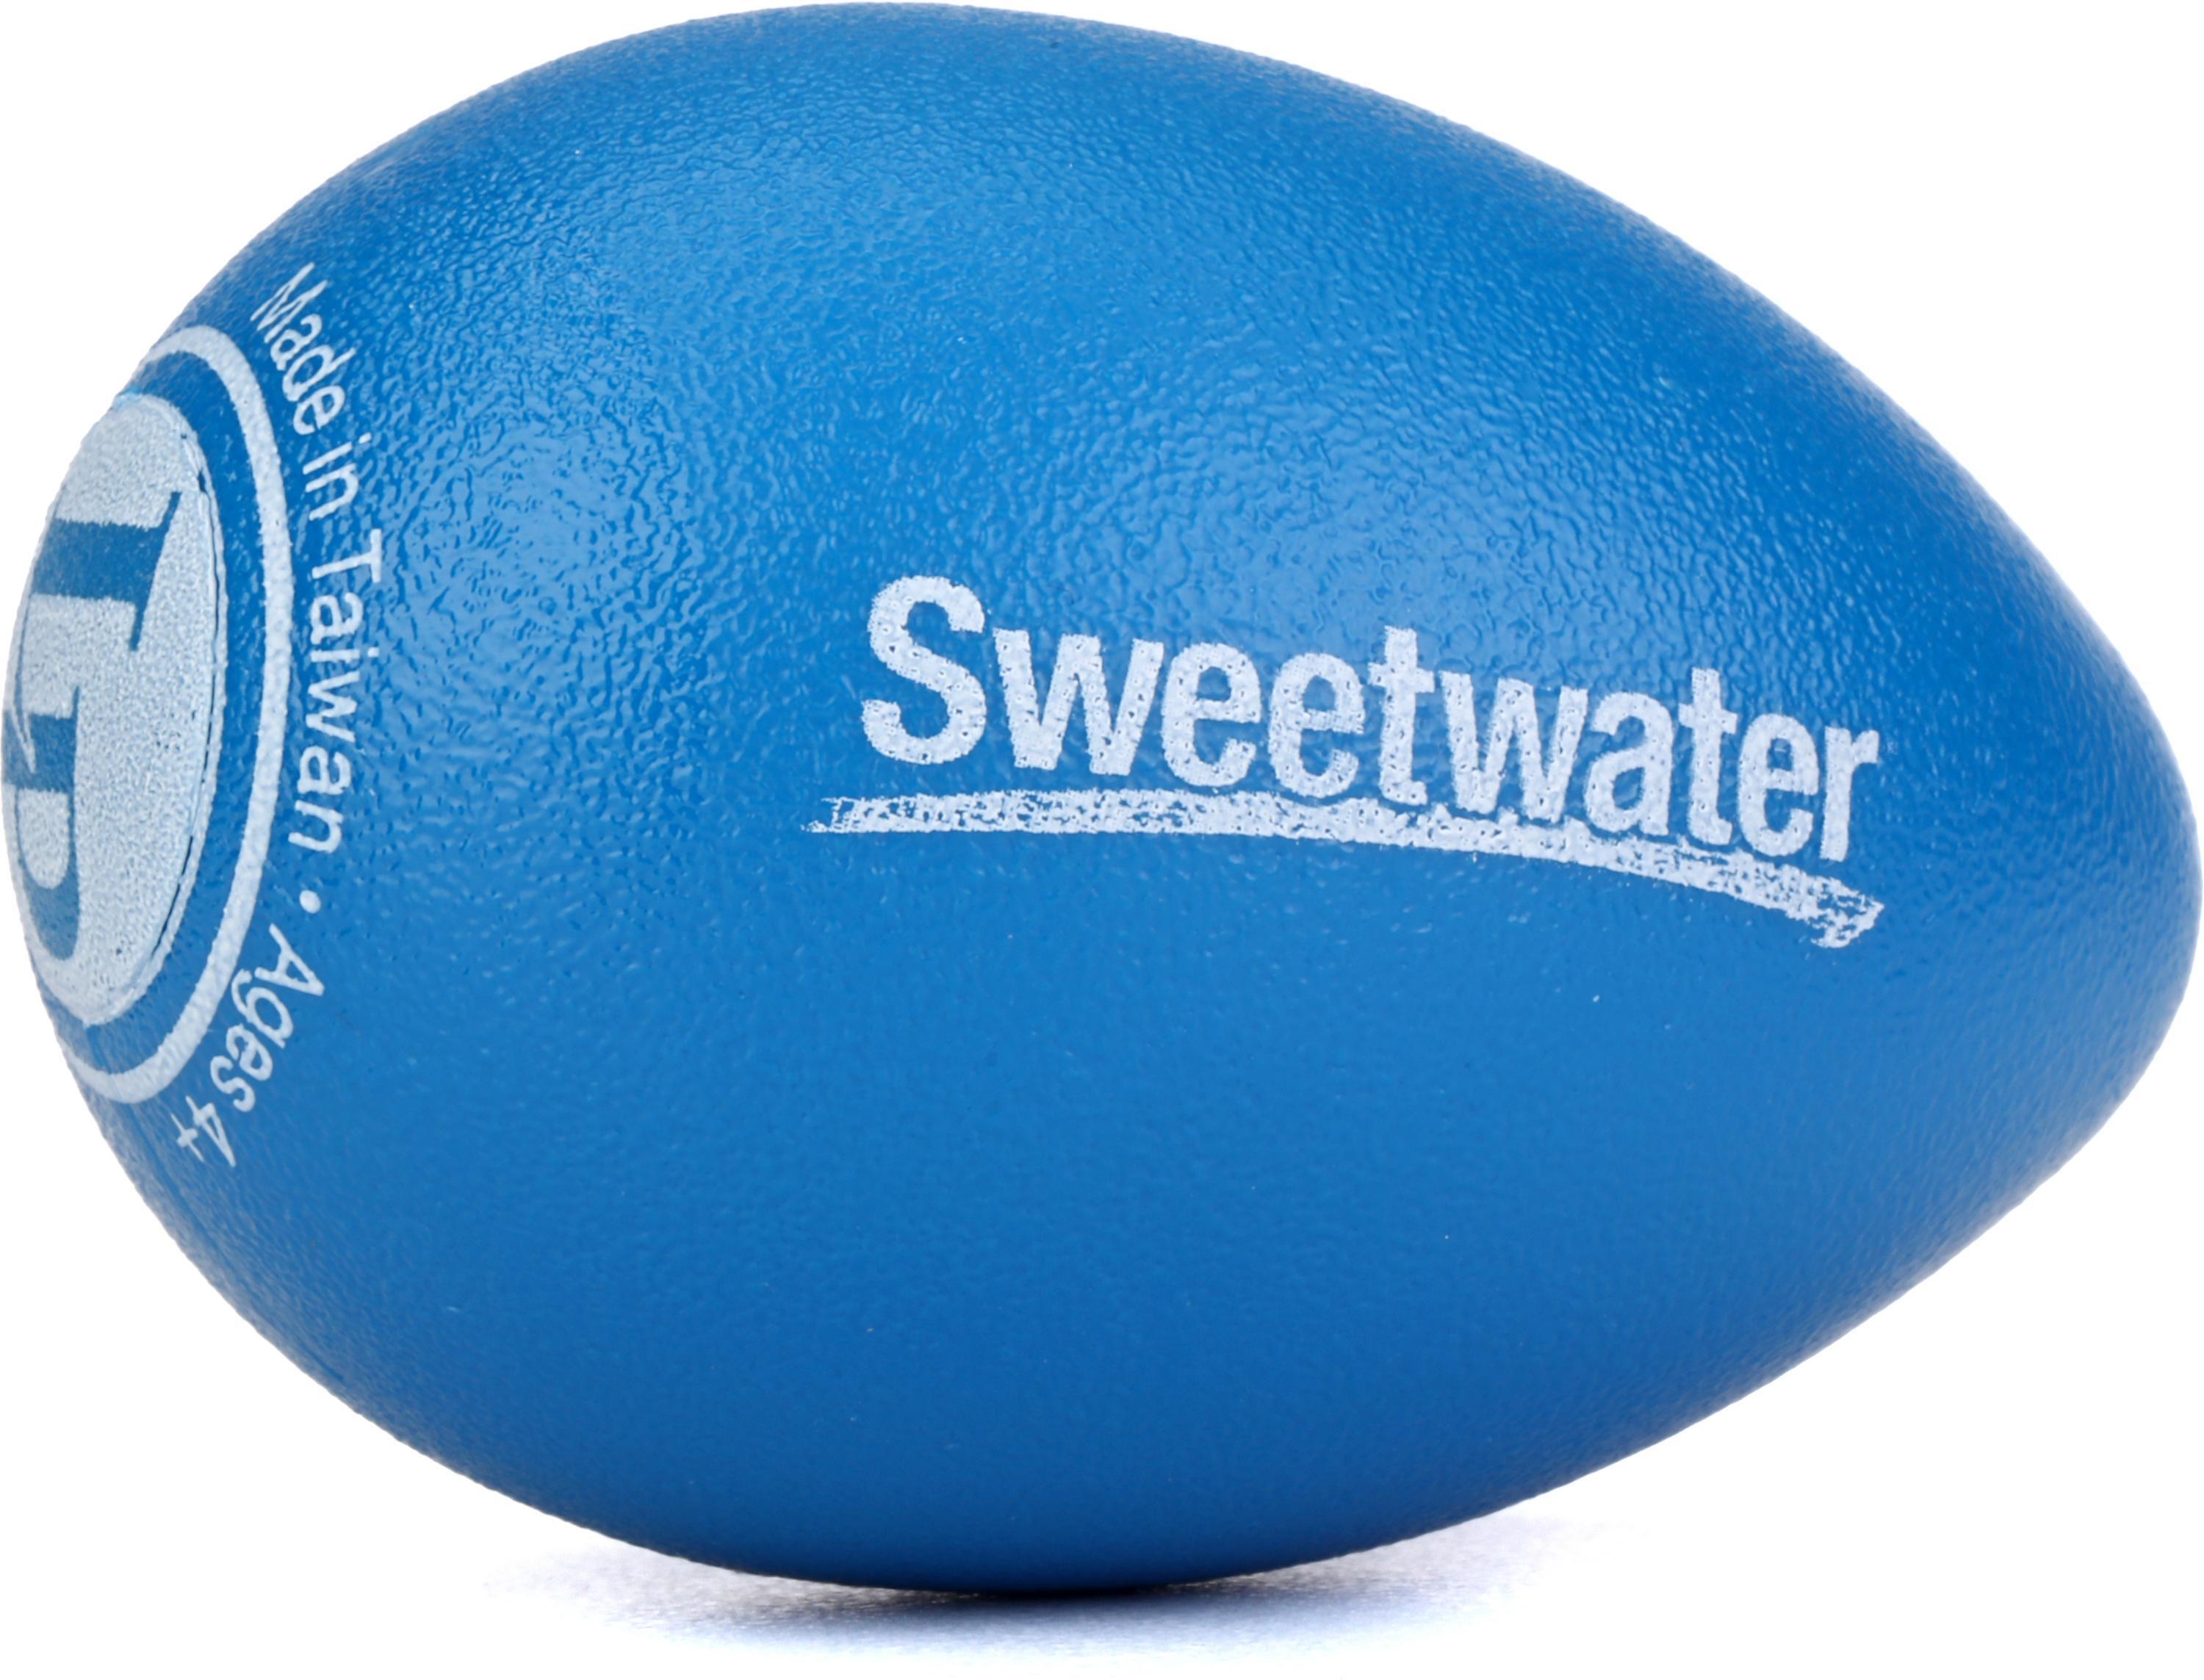 Bundled Item: Latin Percussion Sweetwater Egg Shaker - Blue